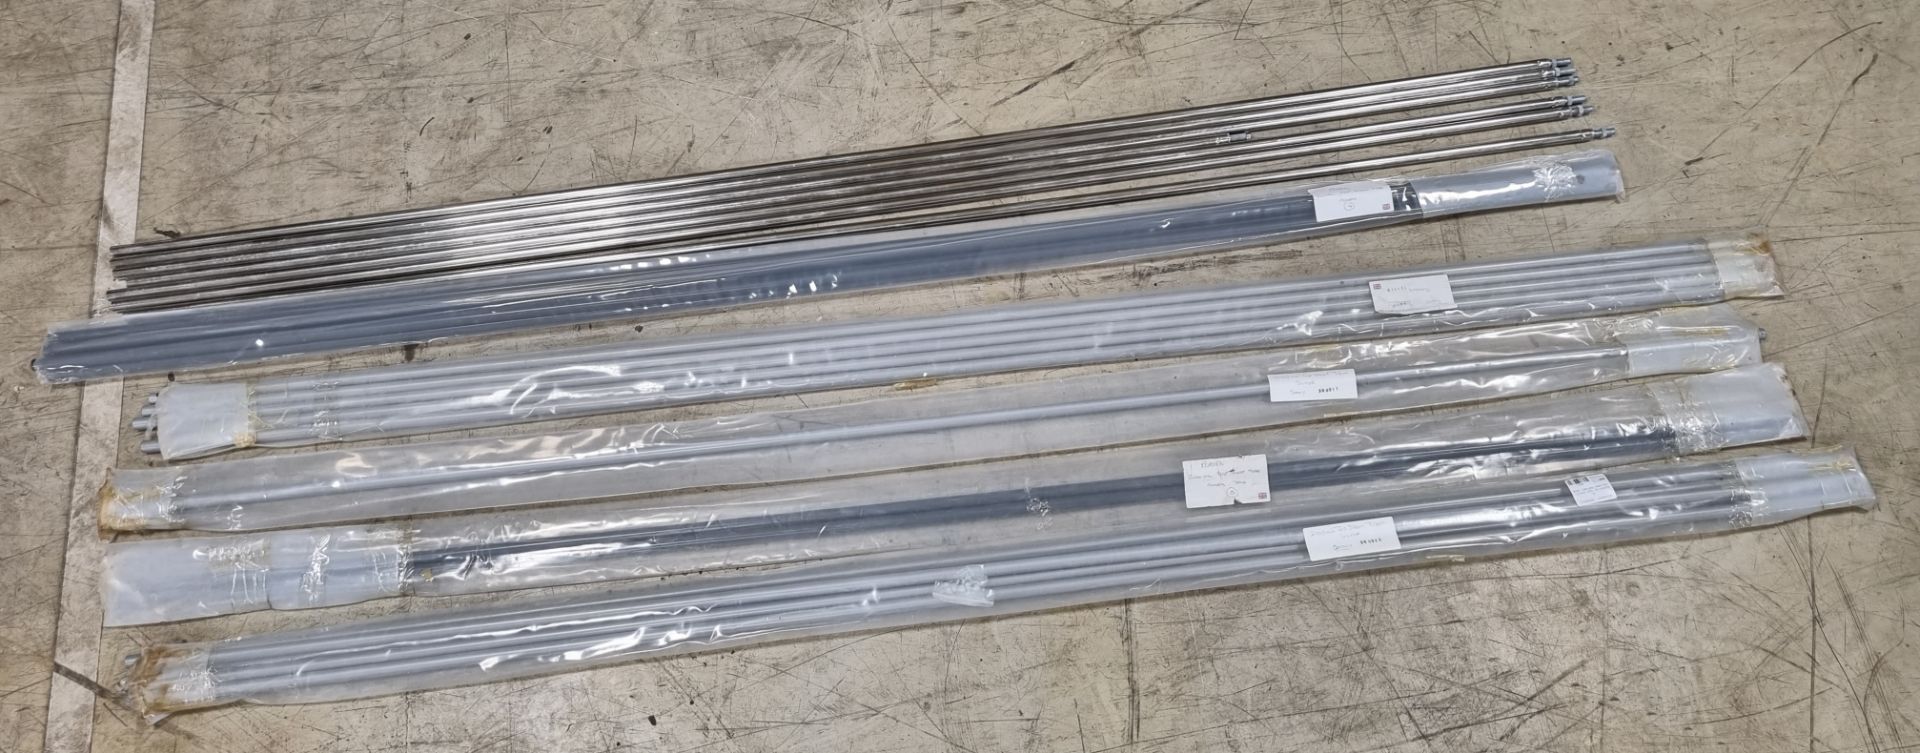 Silver & dark grey metal tubes - L 210 x W 1.5cm - 25 units this lot